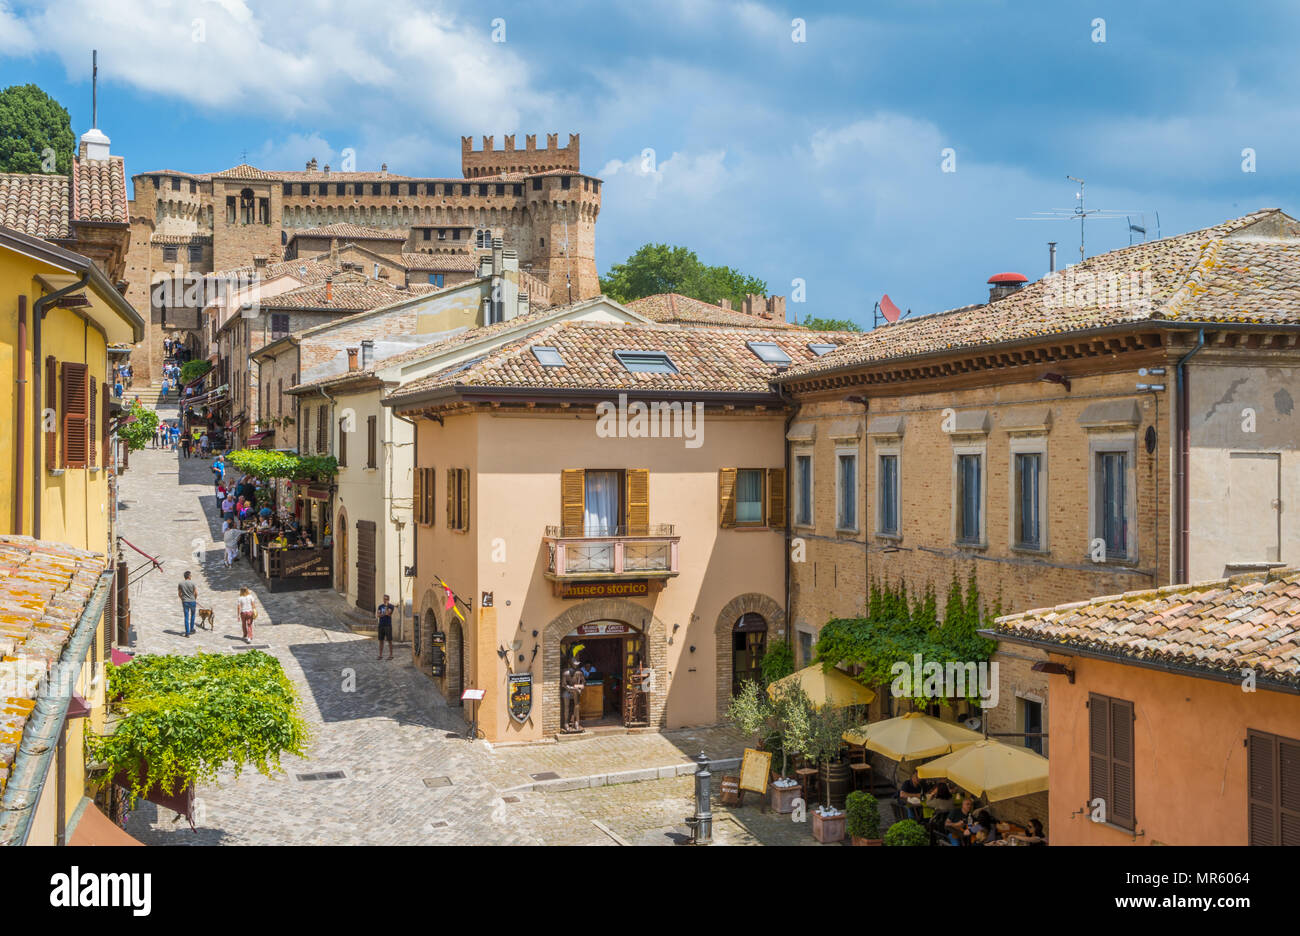 Gradara, small town in the province of Pesaro Urbino, in the Marche region of Italy. Stock Photo